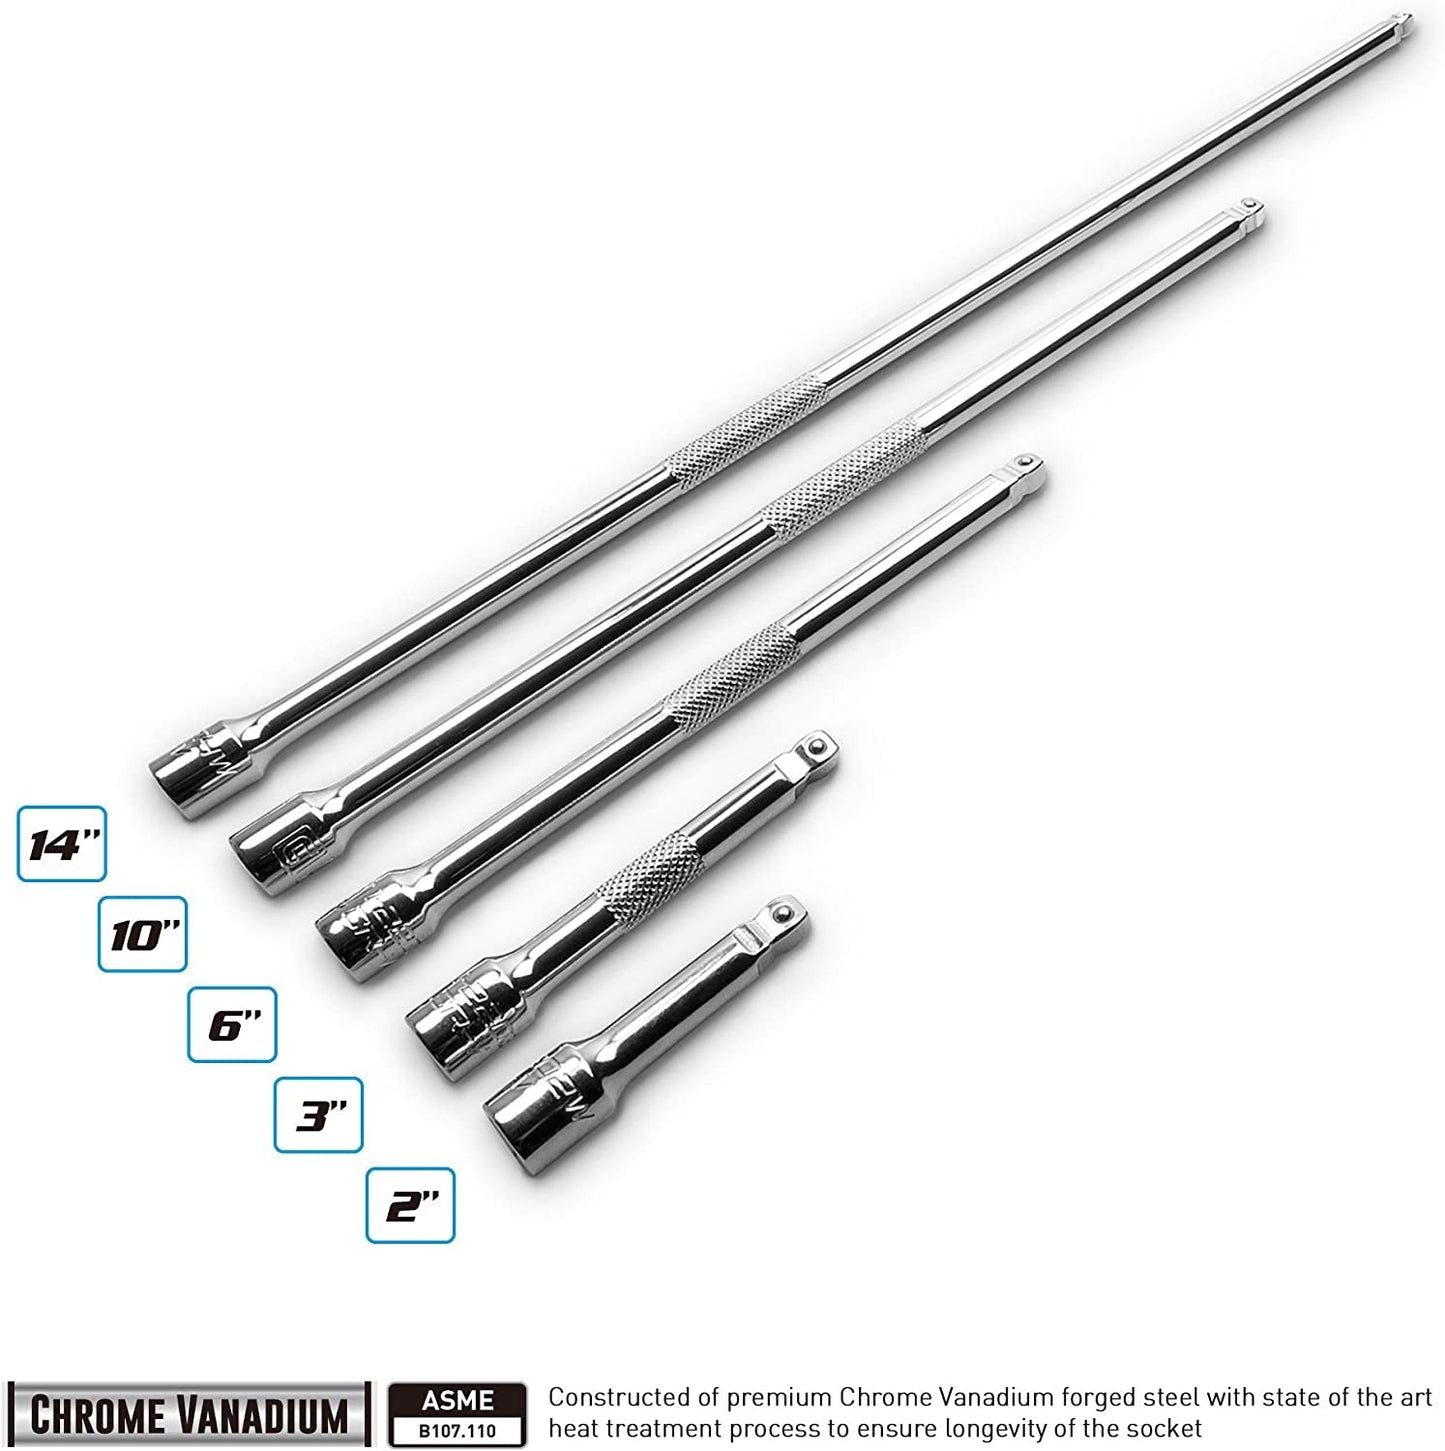 Capri Tools 1/4-Inch Drive Wobble Extension Bar Set, 5-Piece